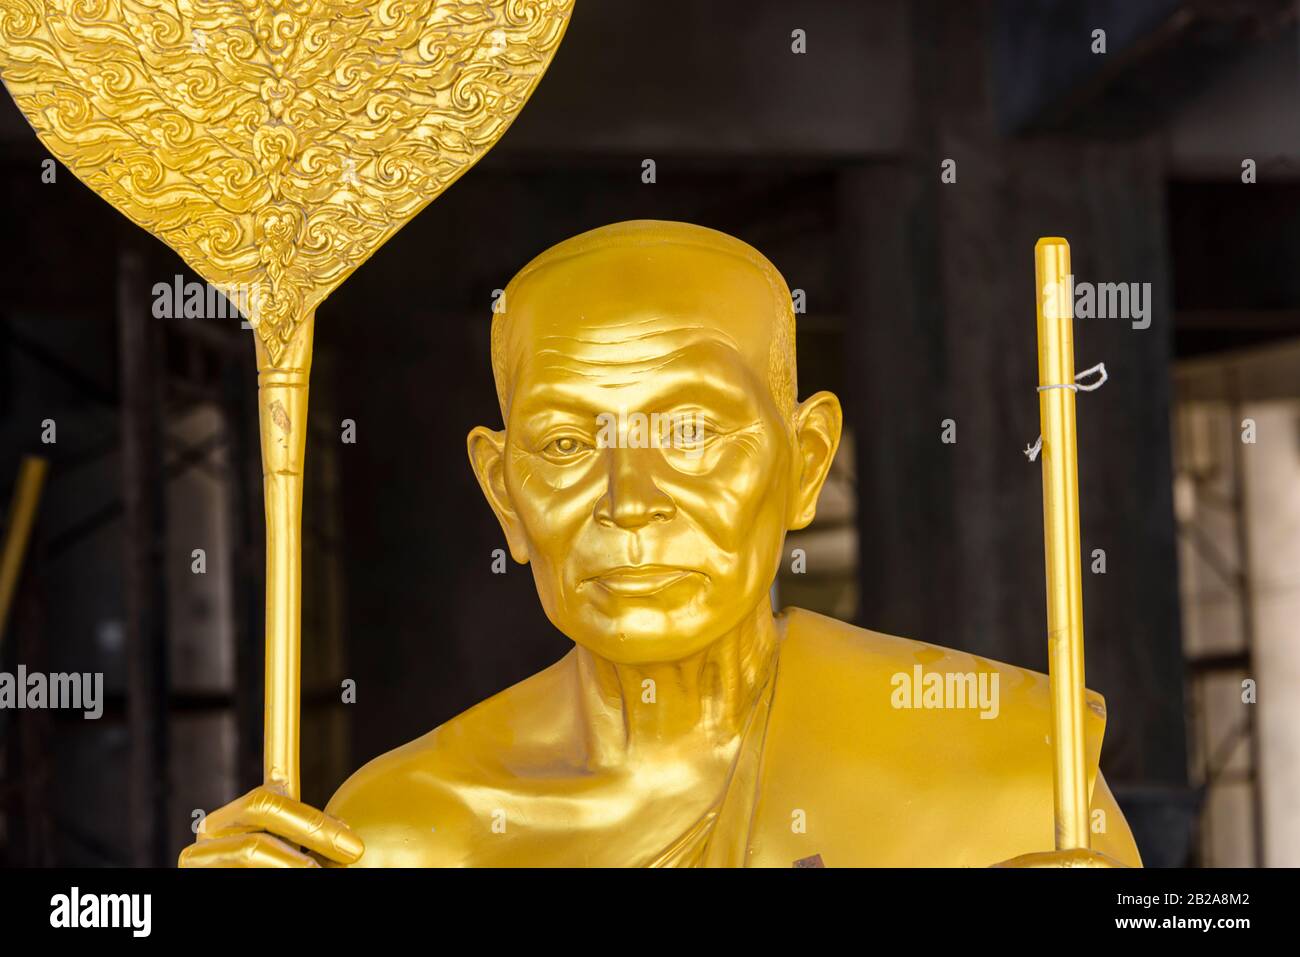 Golden statue of a Buddhist Monk, Thailand Stock Photo